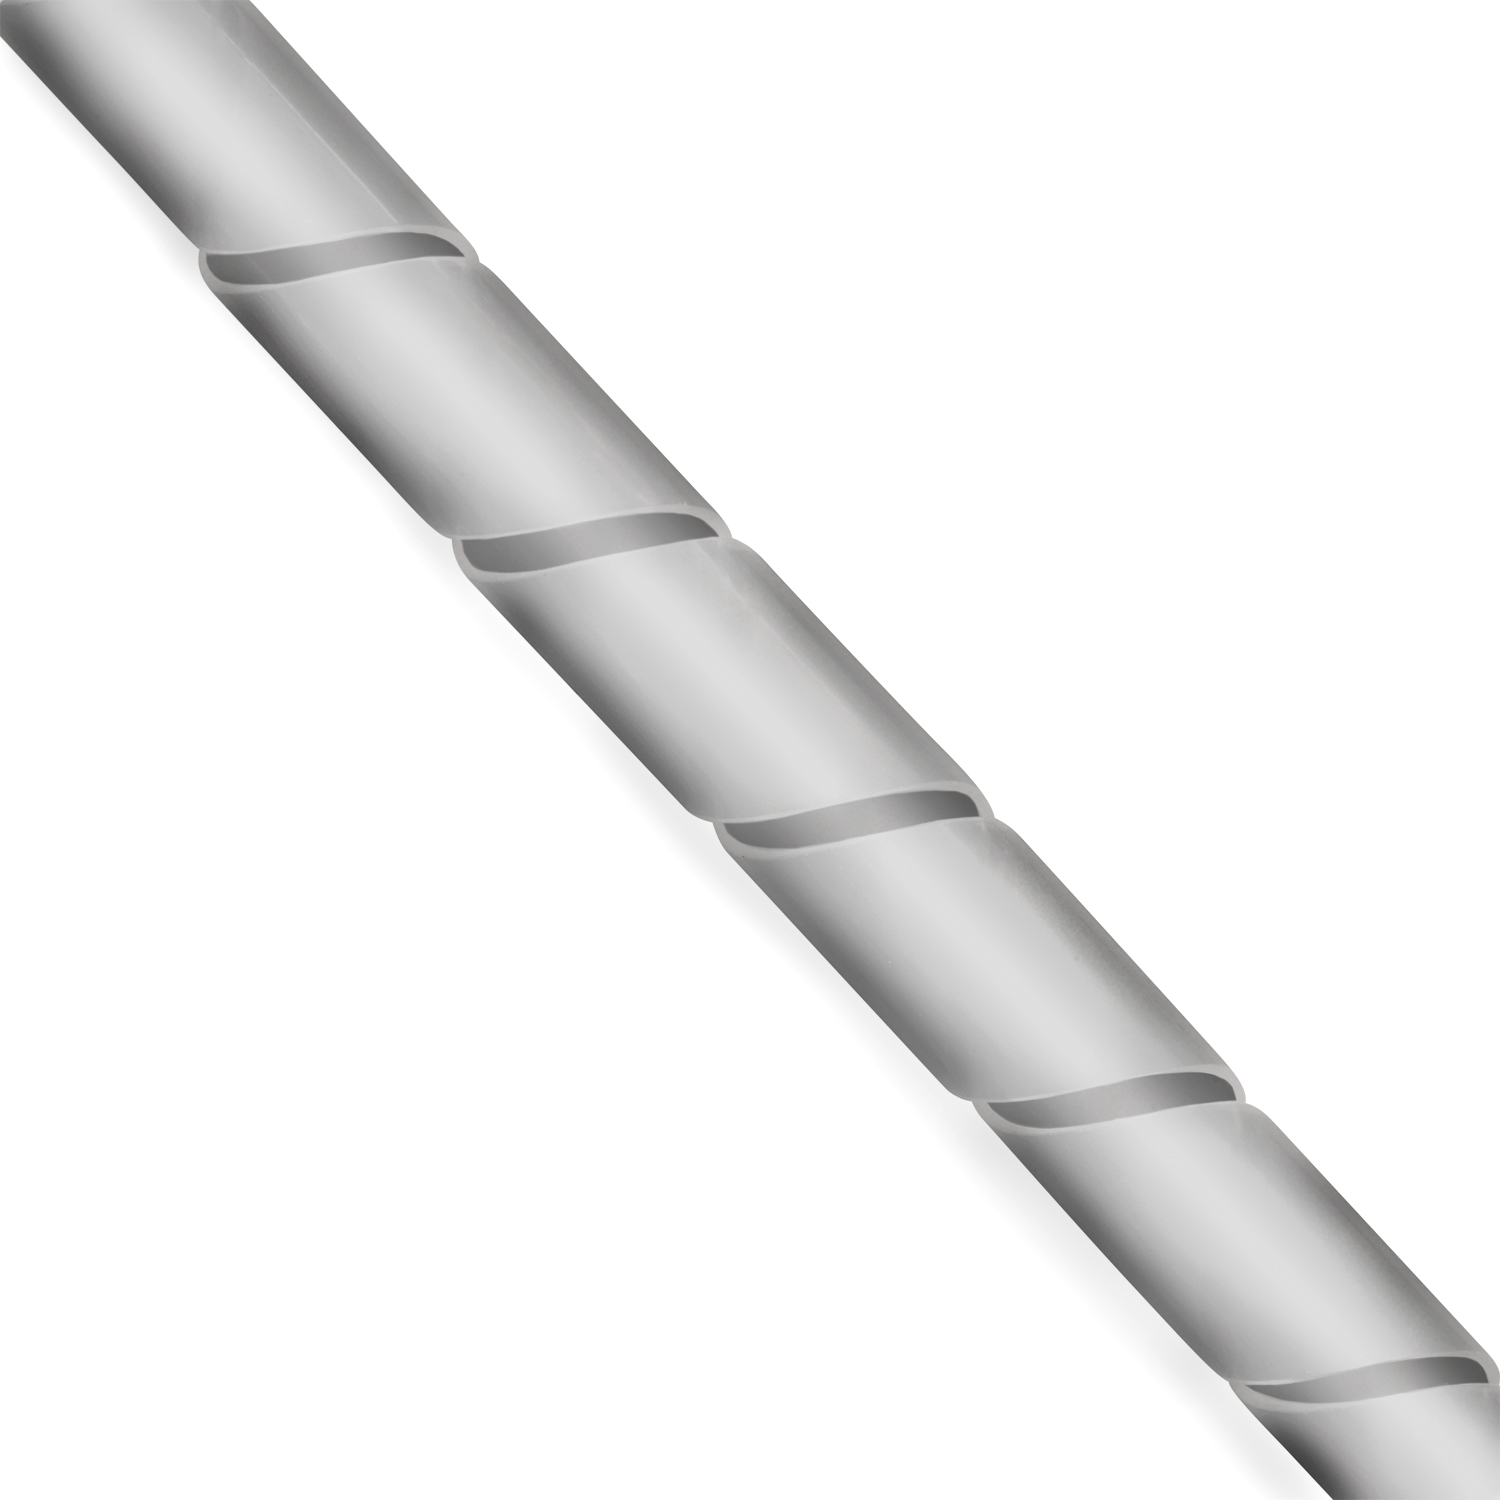 3er Pack 10m Silber TPFNET Silber, Kabelschlauch, Spiral-Kabelschlauch Premium 12-75mm,